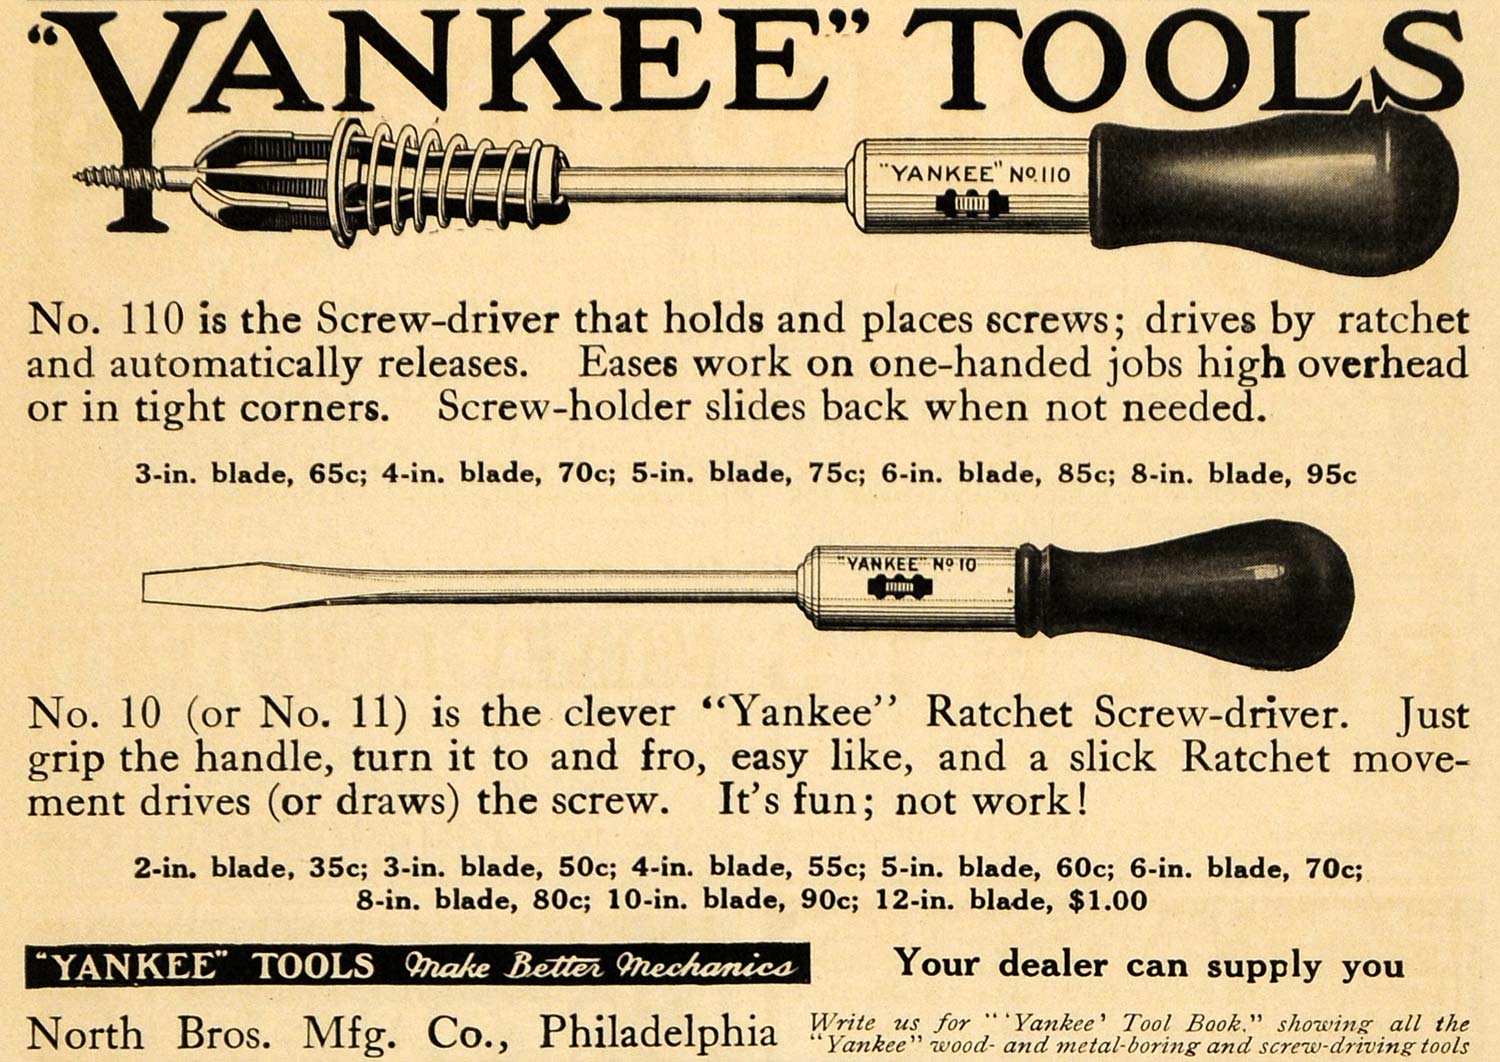 1916 Ad North Bros. Yankee Screwdrivers No 110 & No. 10 - ORIGINAL ILW1